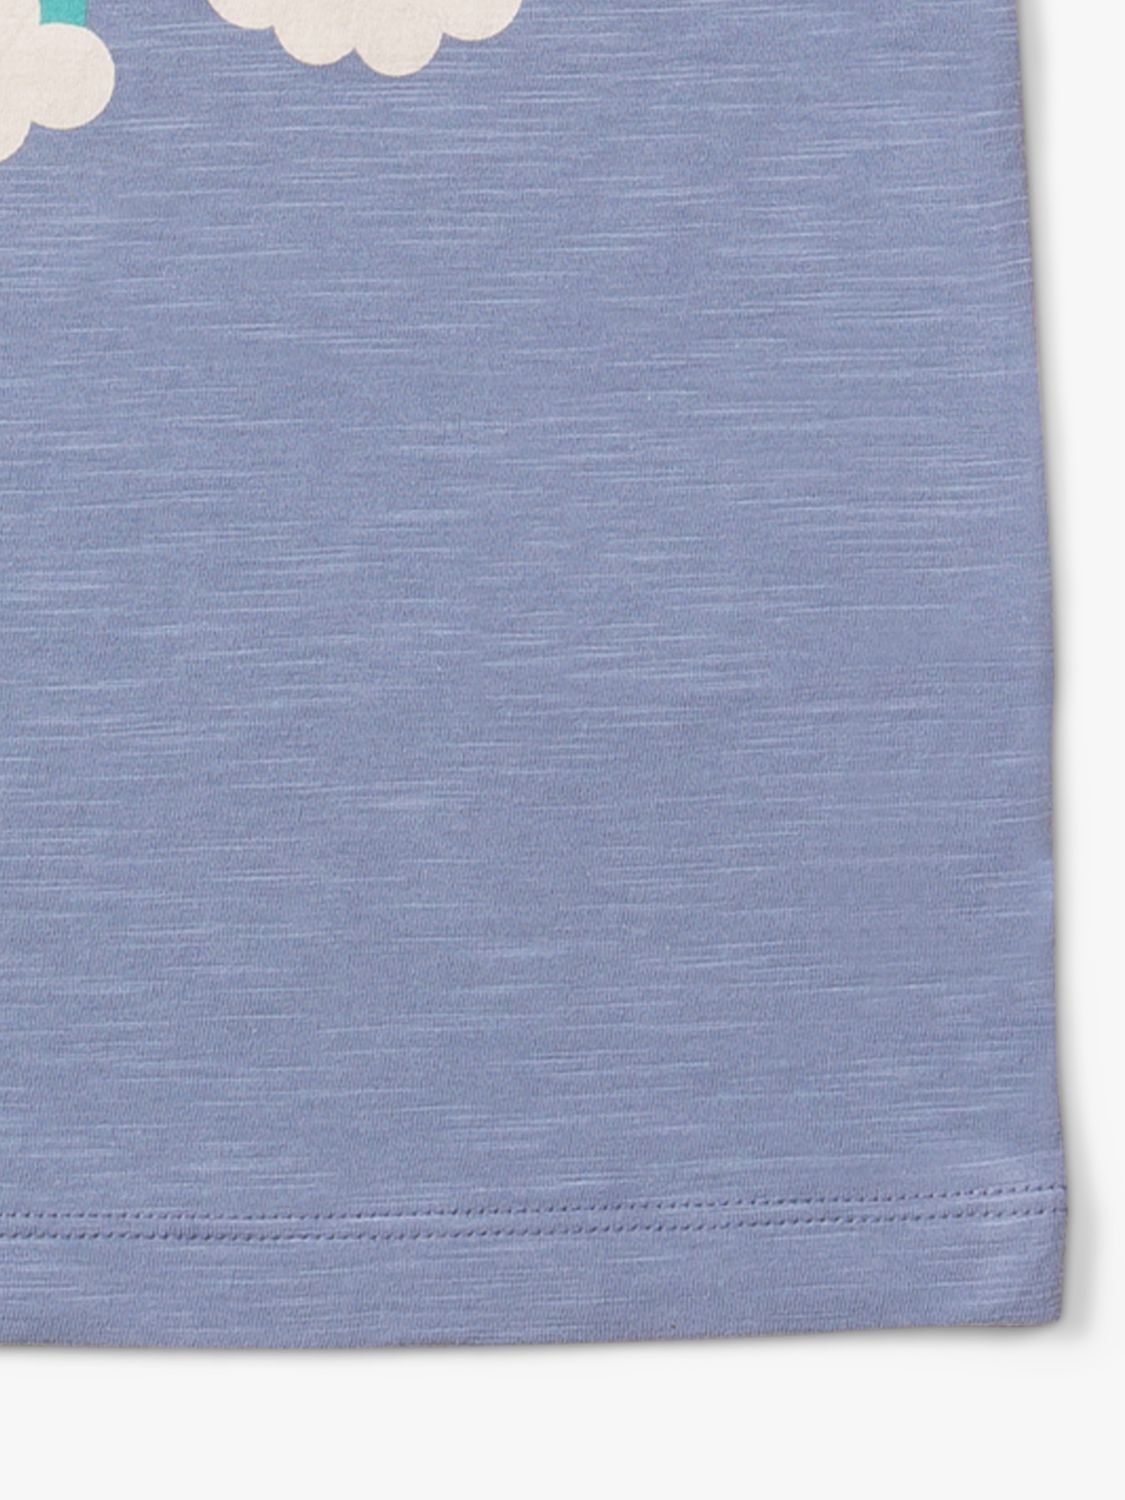 Little Green Radicals Baby Organic Cotton Rainbow T-Shirt, French Blue/Multi, 12-18 months